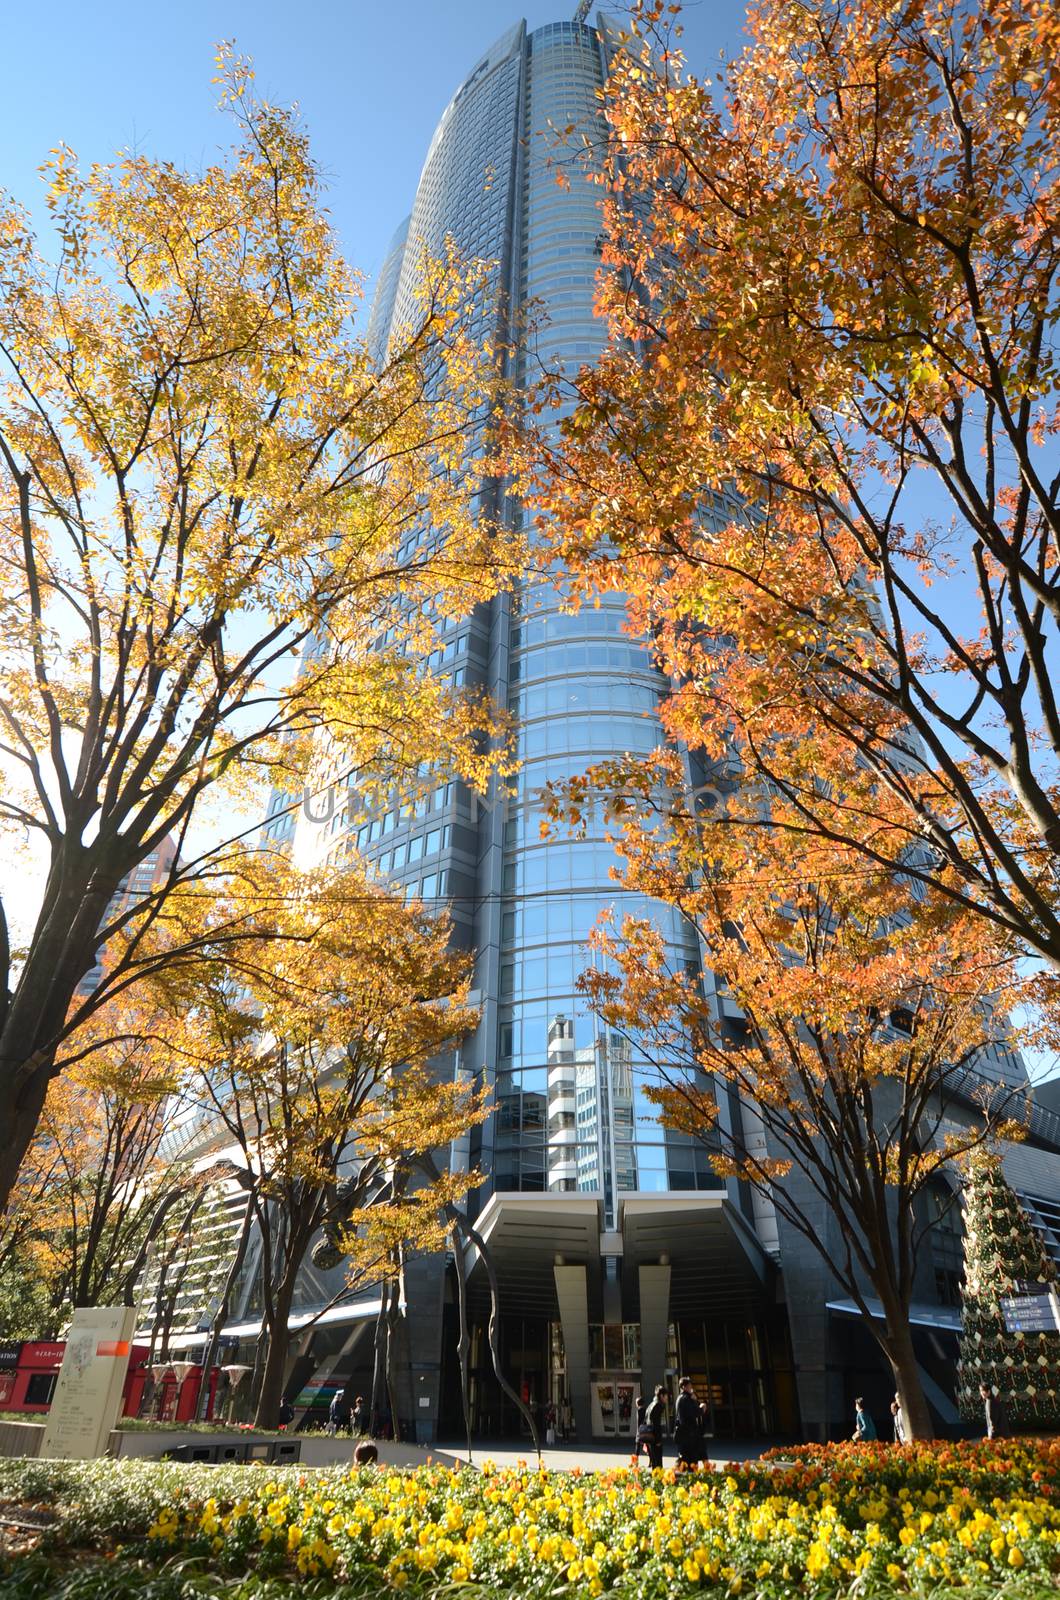 Tokyo, Japan - November 23, 2013: People visit the Mori Tower in Roppongi Hills by siraanamwong